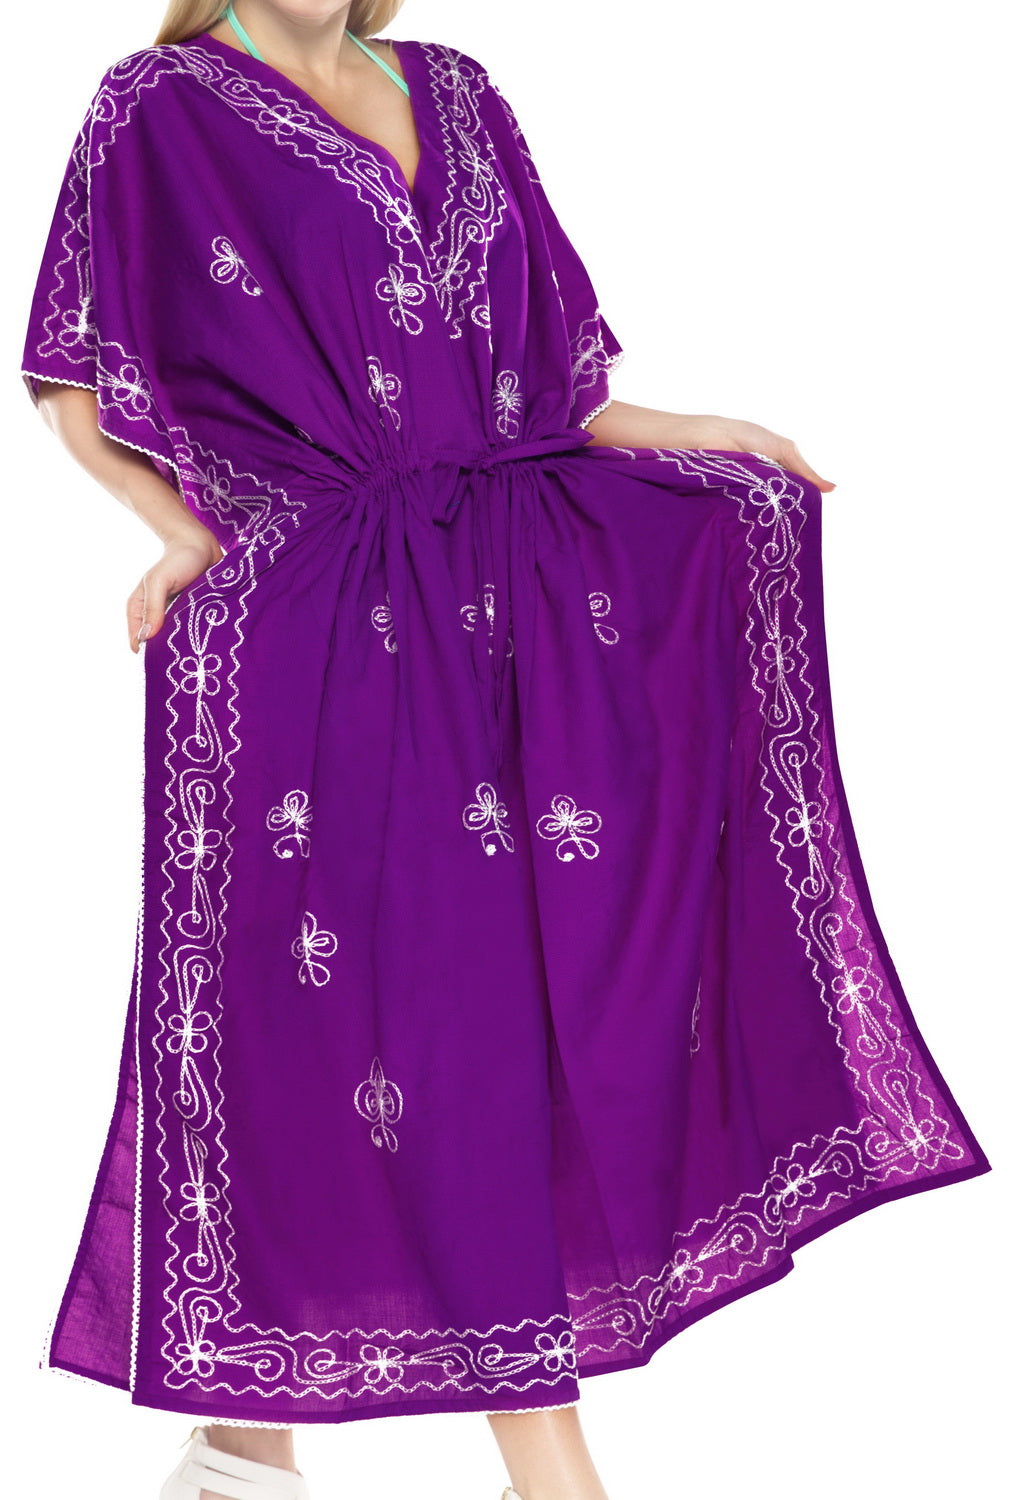 la-leela-rayon-solid-long-caftan-boho-dress-ladies-violet_916-osfm-14-18w-l-2x